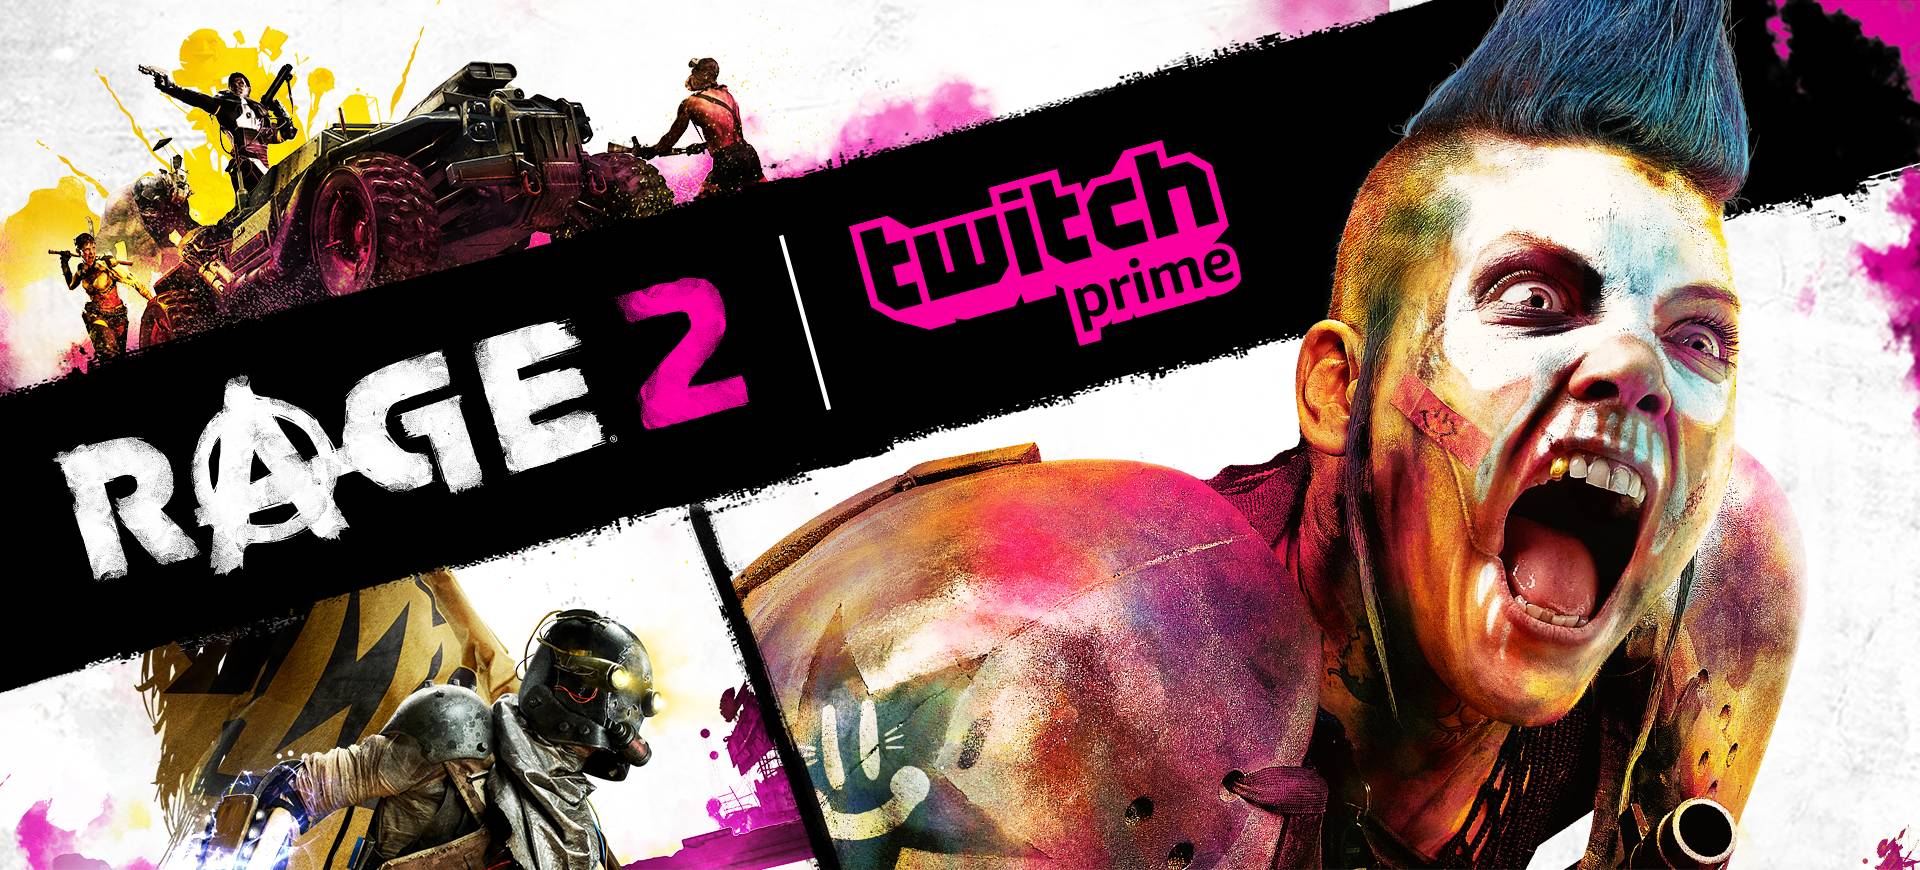 Rage 2 Twitch Primeで獲得できるゲーム内報酬